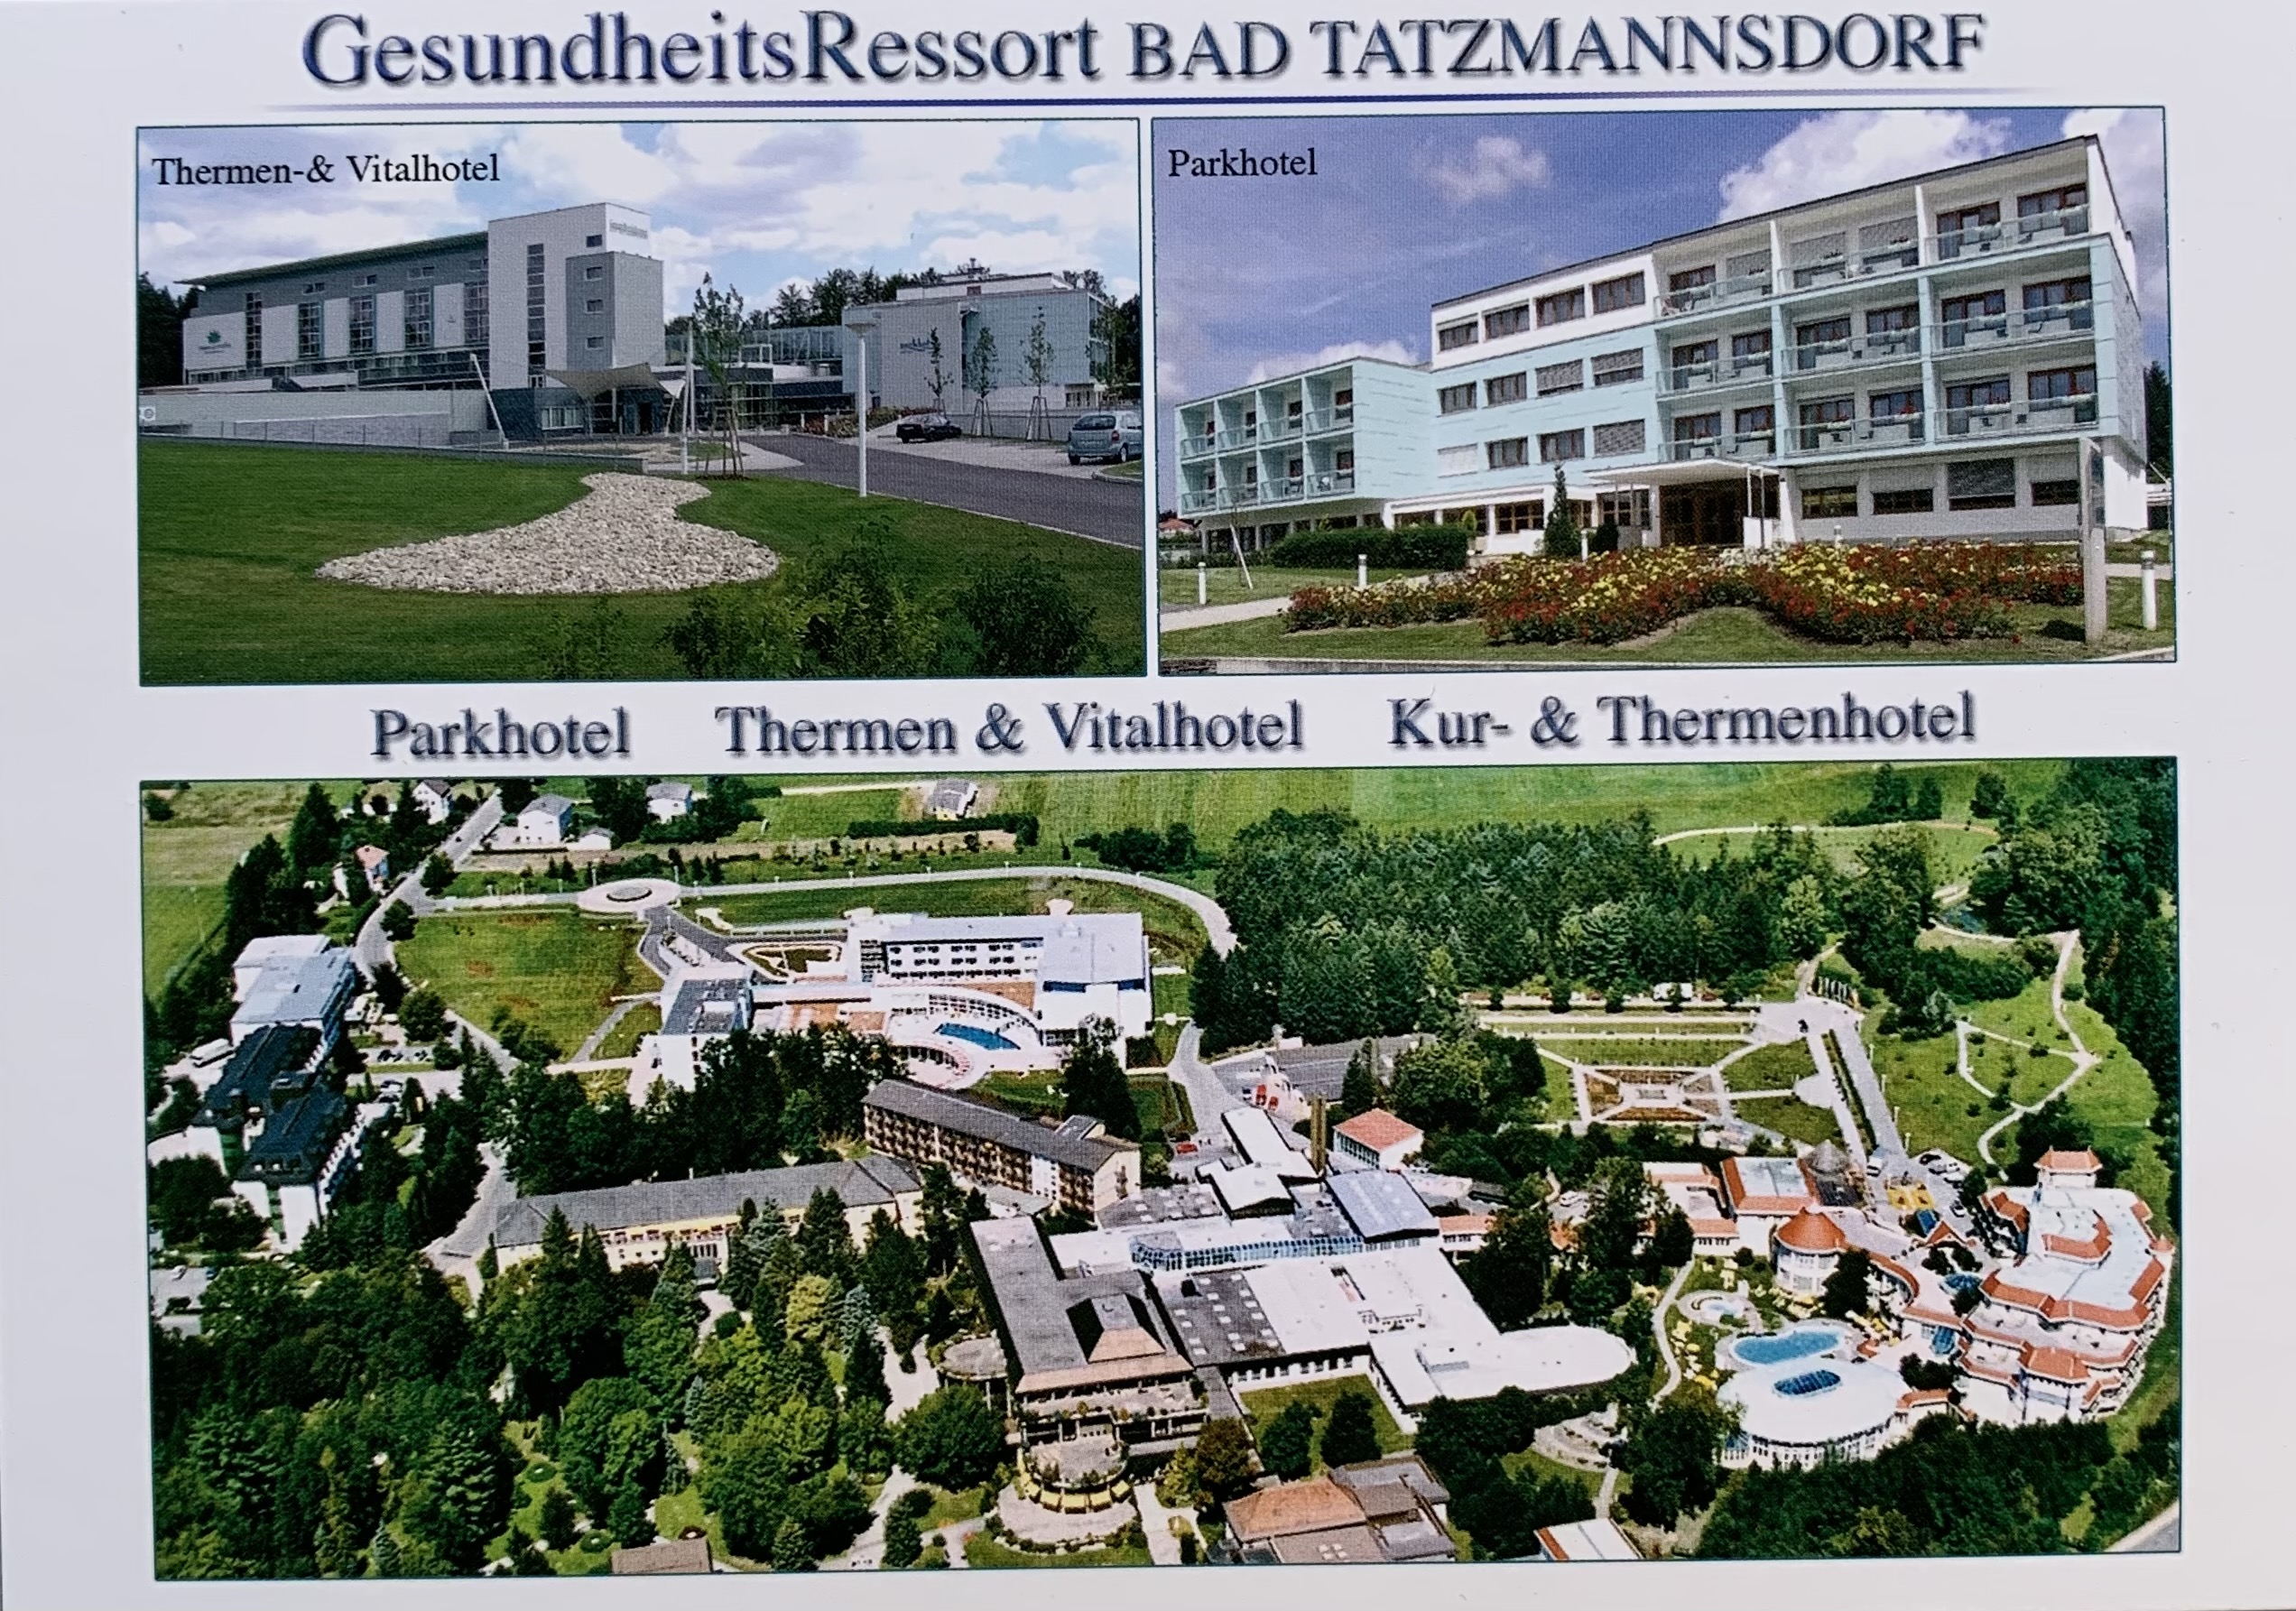 AK - Bad Tatzmannsdorf 01-7431-02